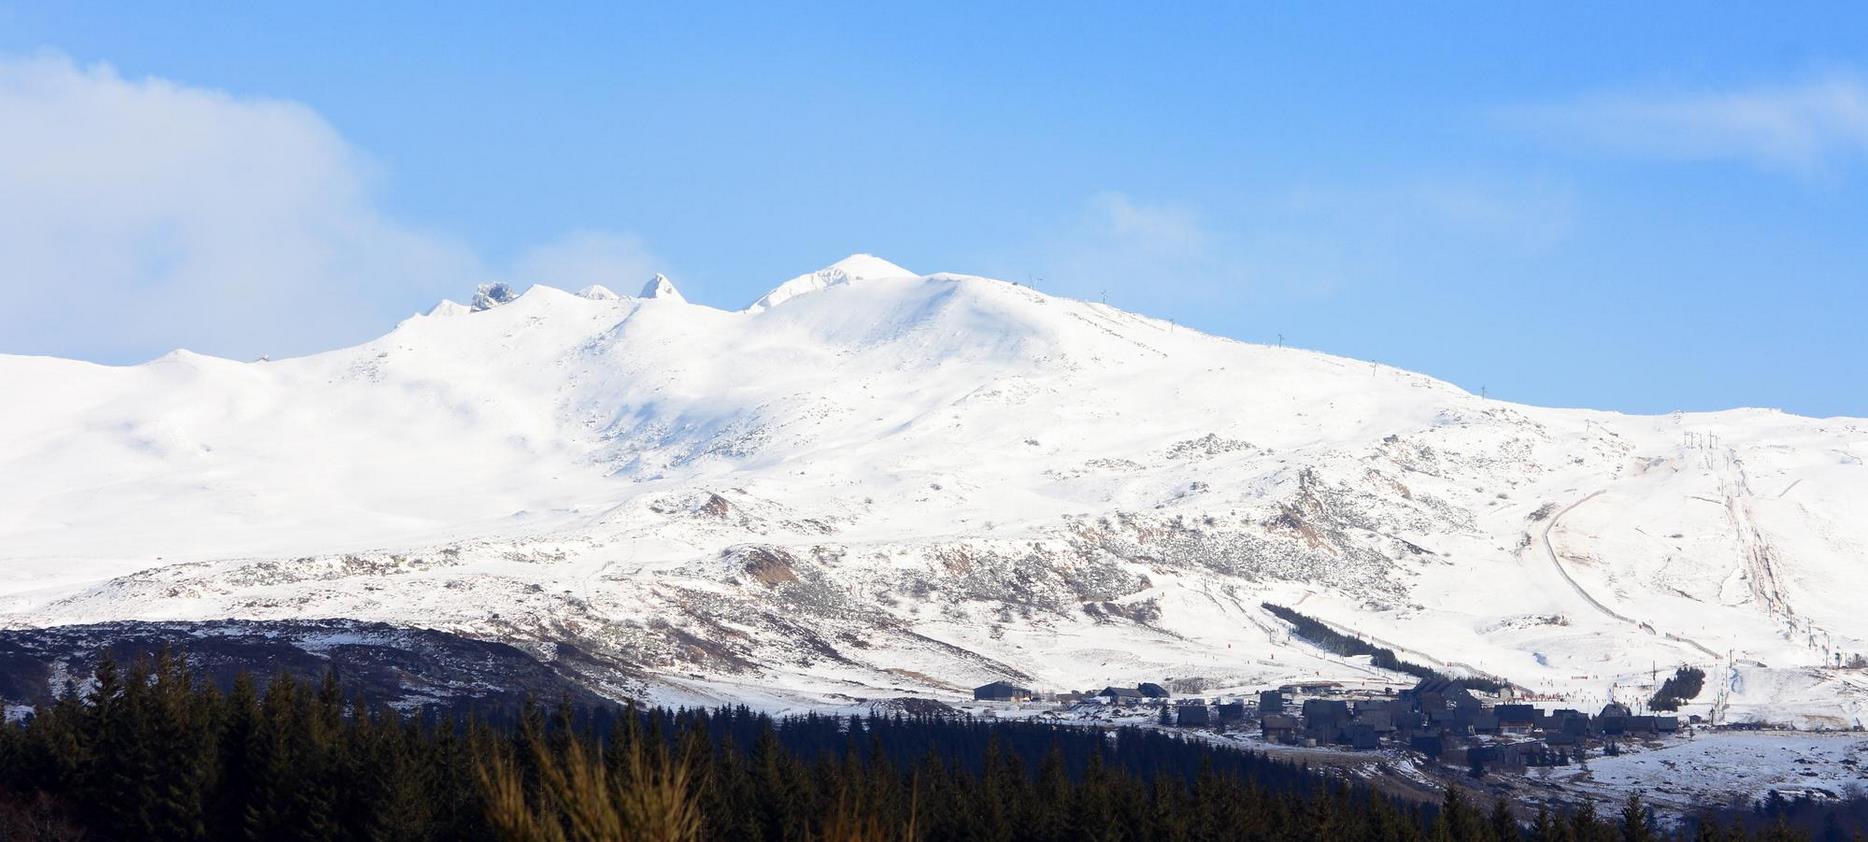 The snow-capped Auvergne Volcanoes